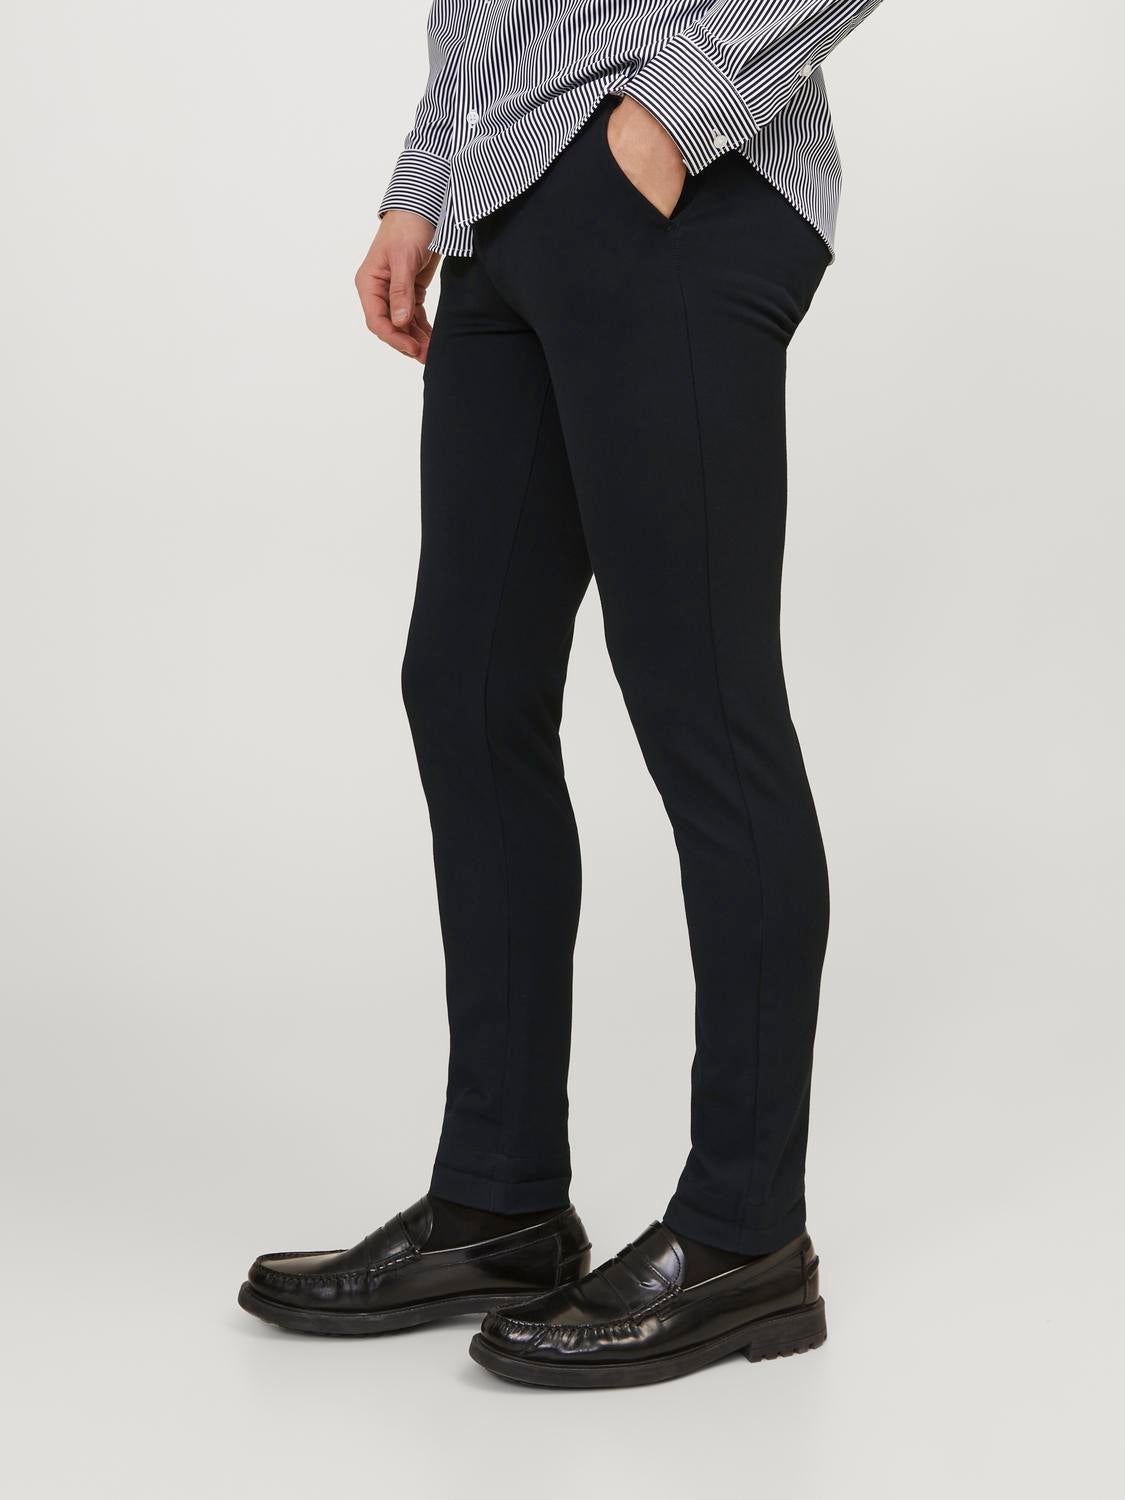 Ladies Long Leg Tall Good Quality STRETCH Fit Black Work Office School  Trousers. | eBay